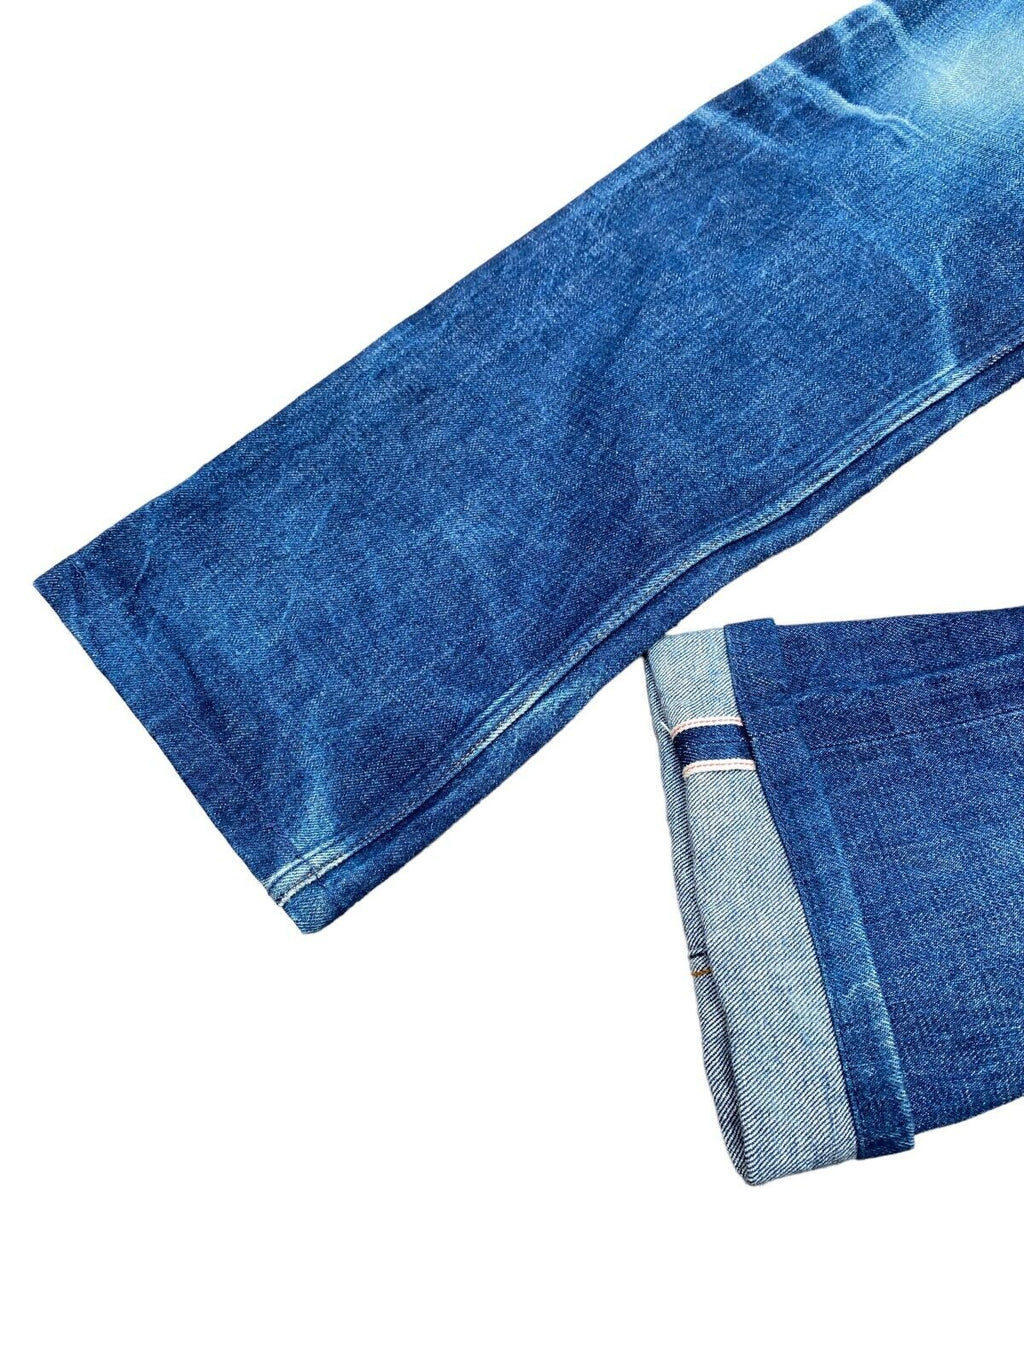 Butler  New Standard  Blue Denim Jeans   Size 34 APC